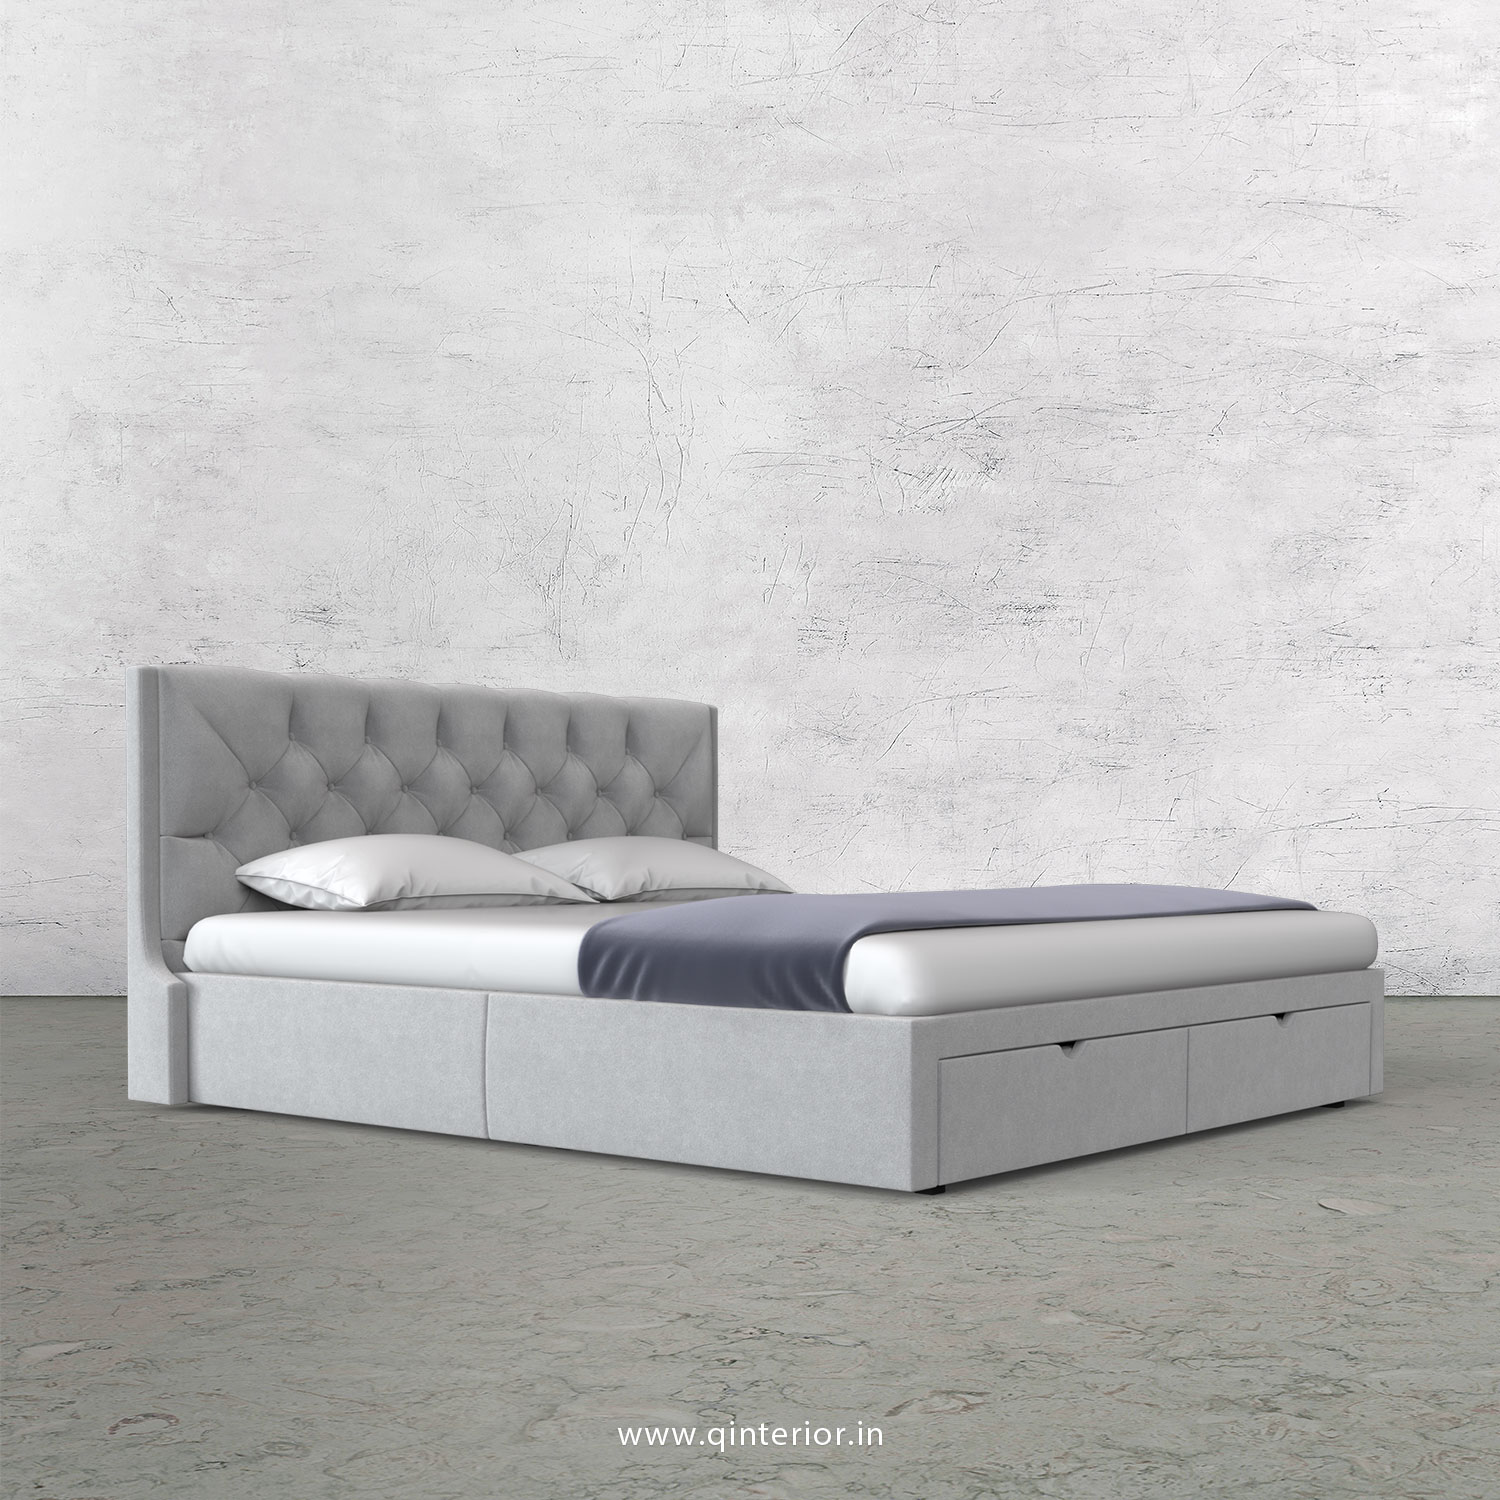 Scorpius King Size Storage Bed in Velvet Fabric - KBD001 VL06